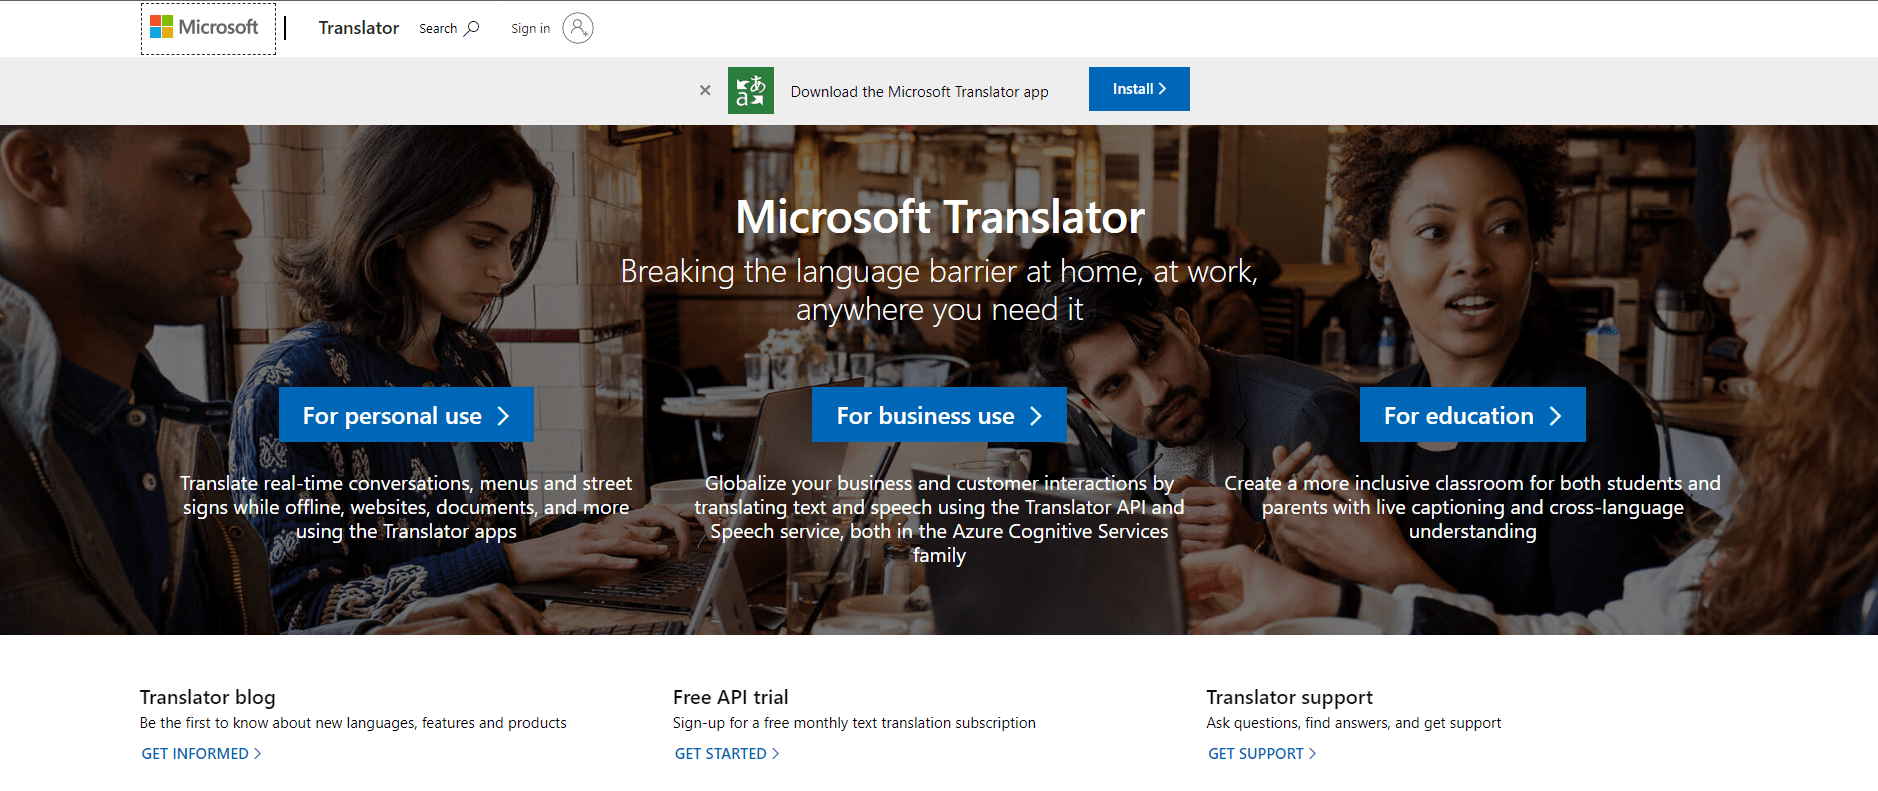 Microsoft Translator Overview - Best Google Translate Alternatives